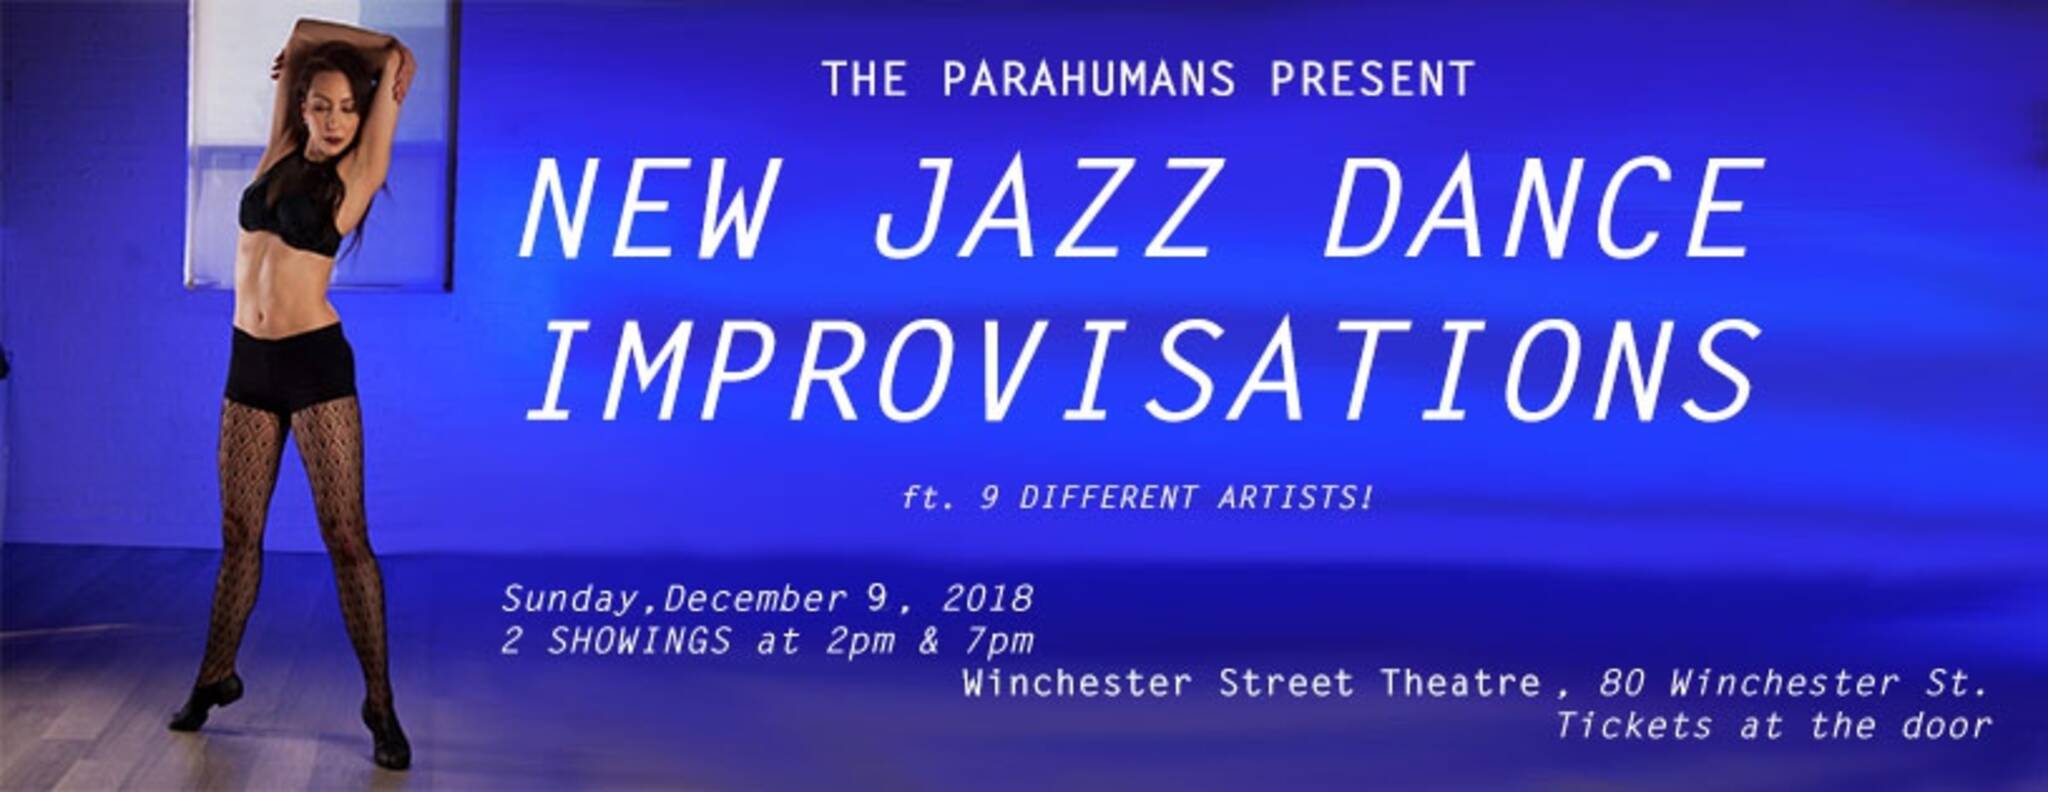 New Jazz Dance Improvisations - 